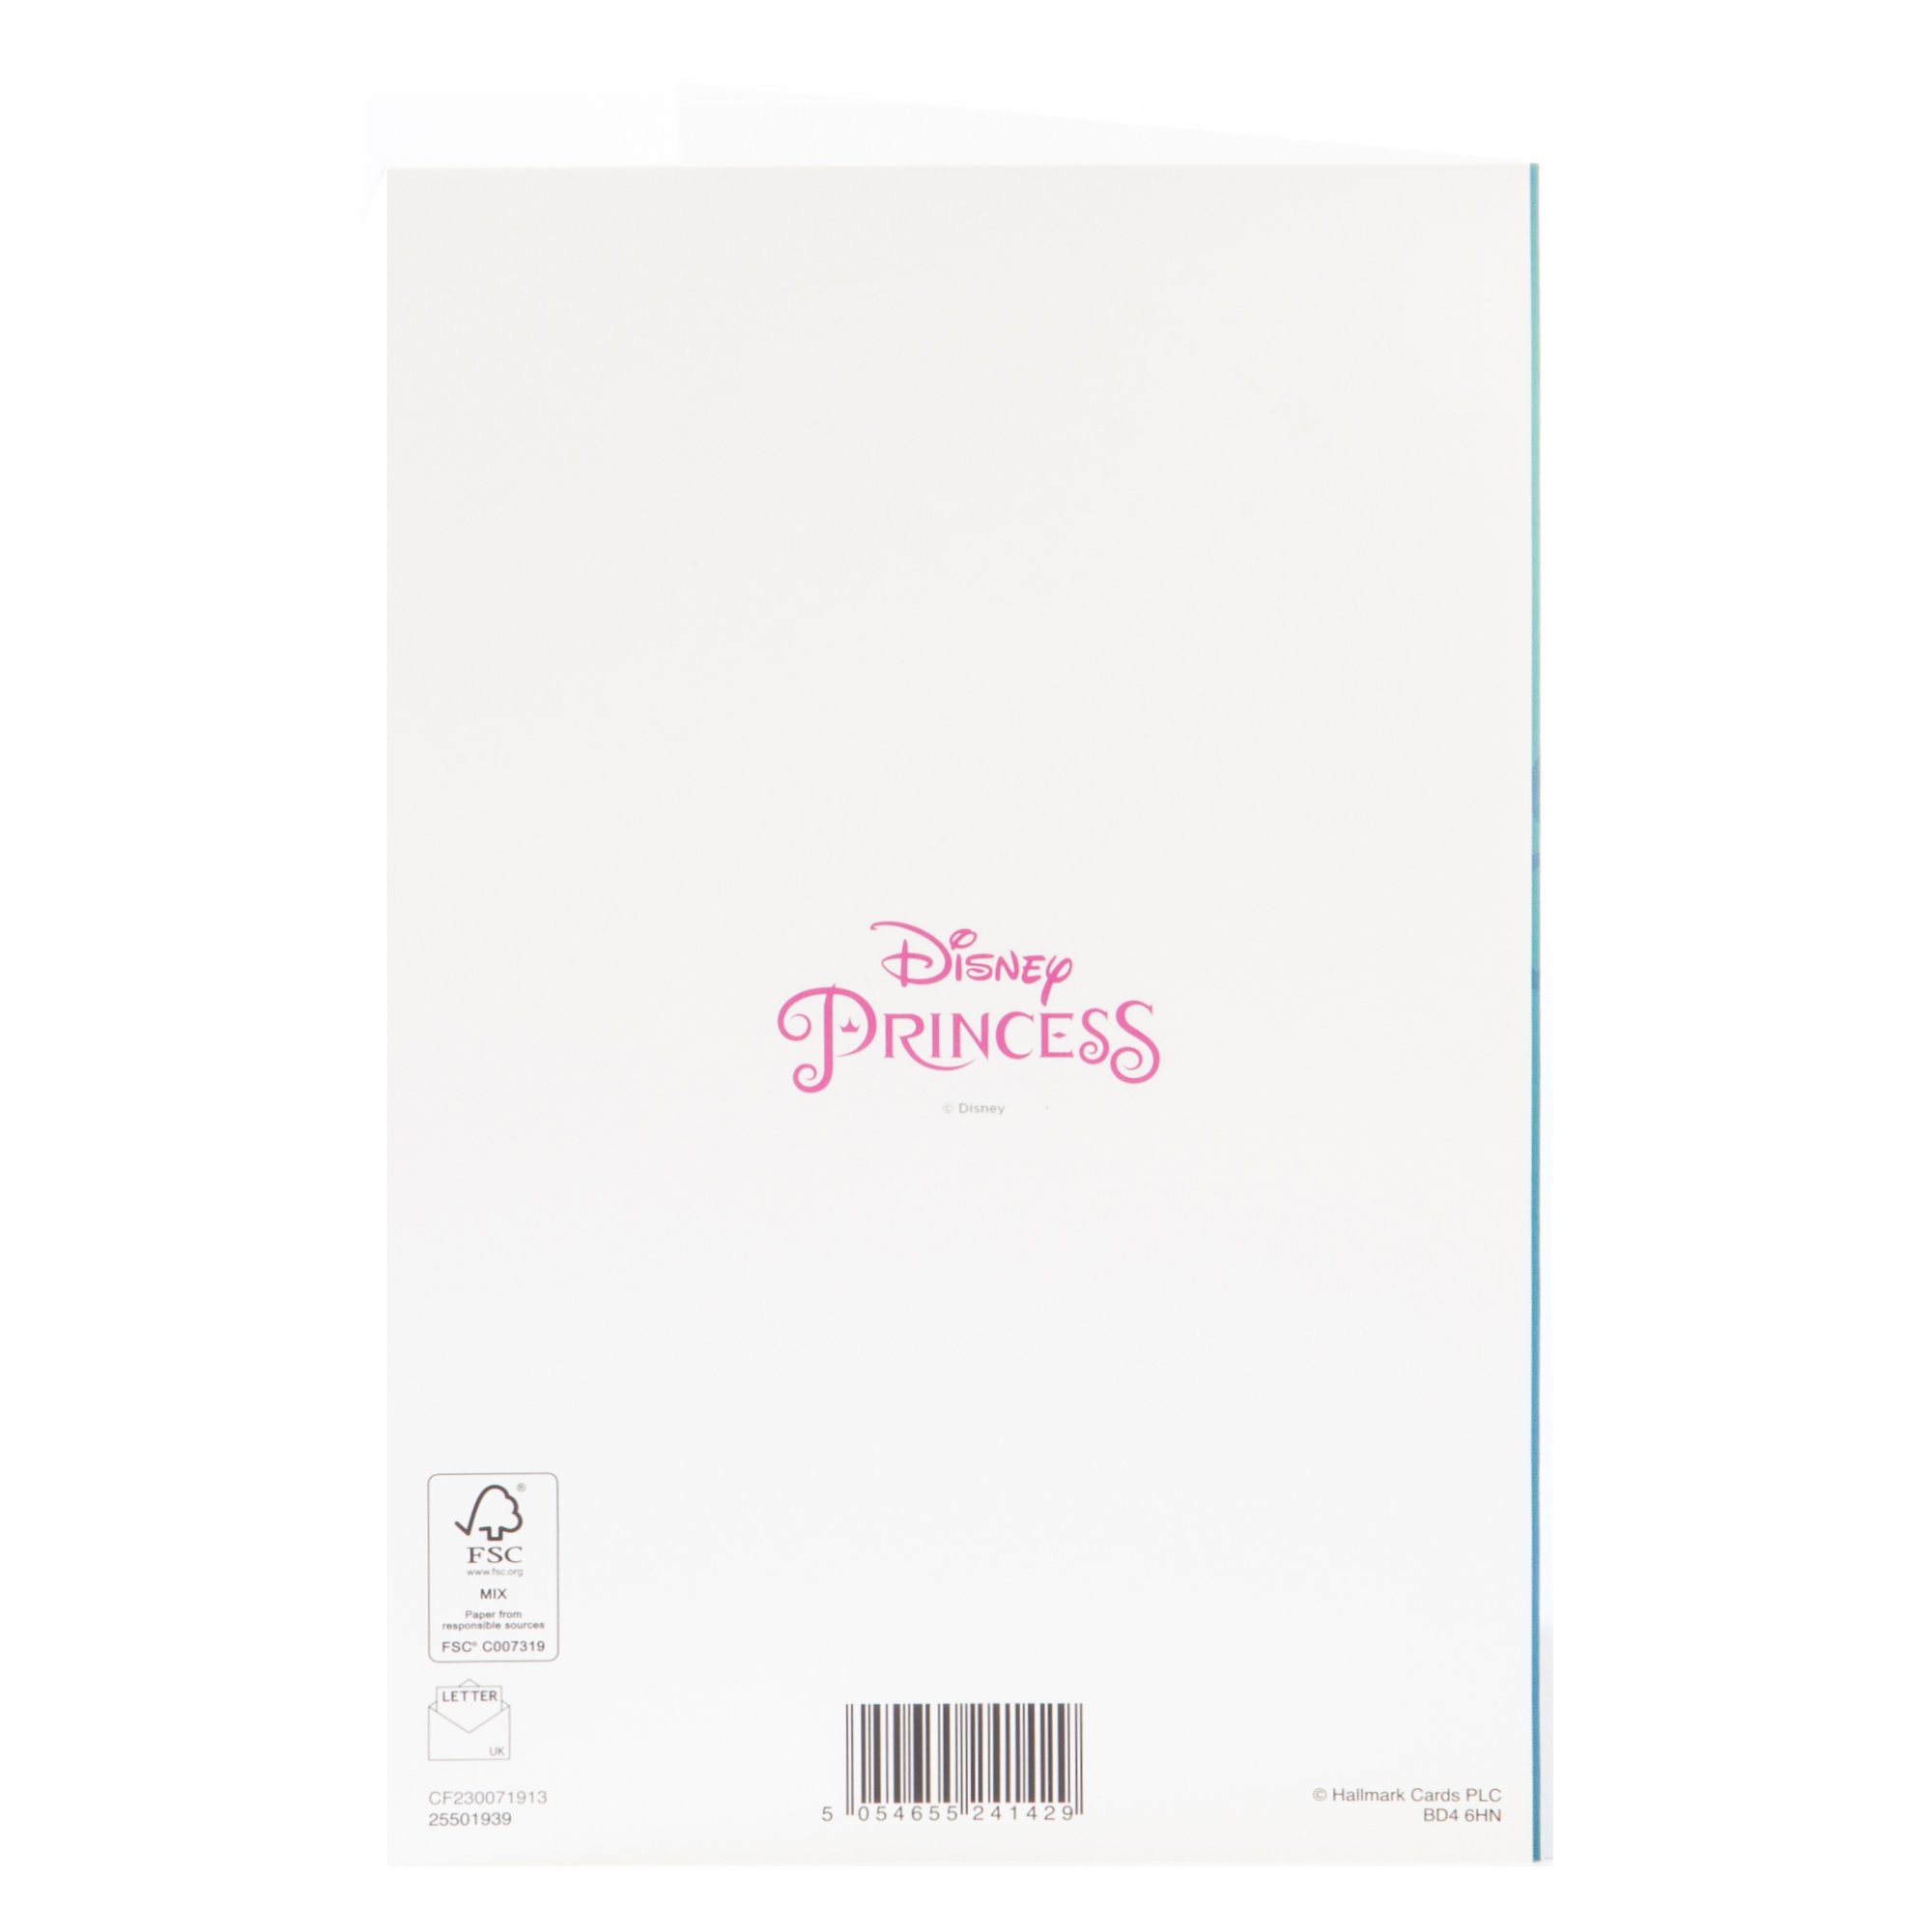 Disney Princess Tangled 6th Birthday Card